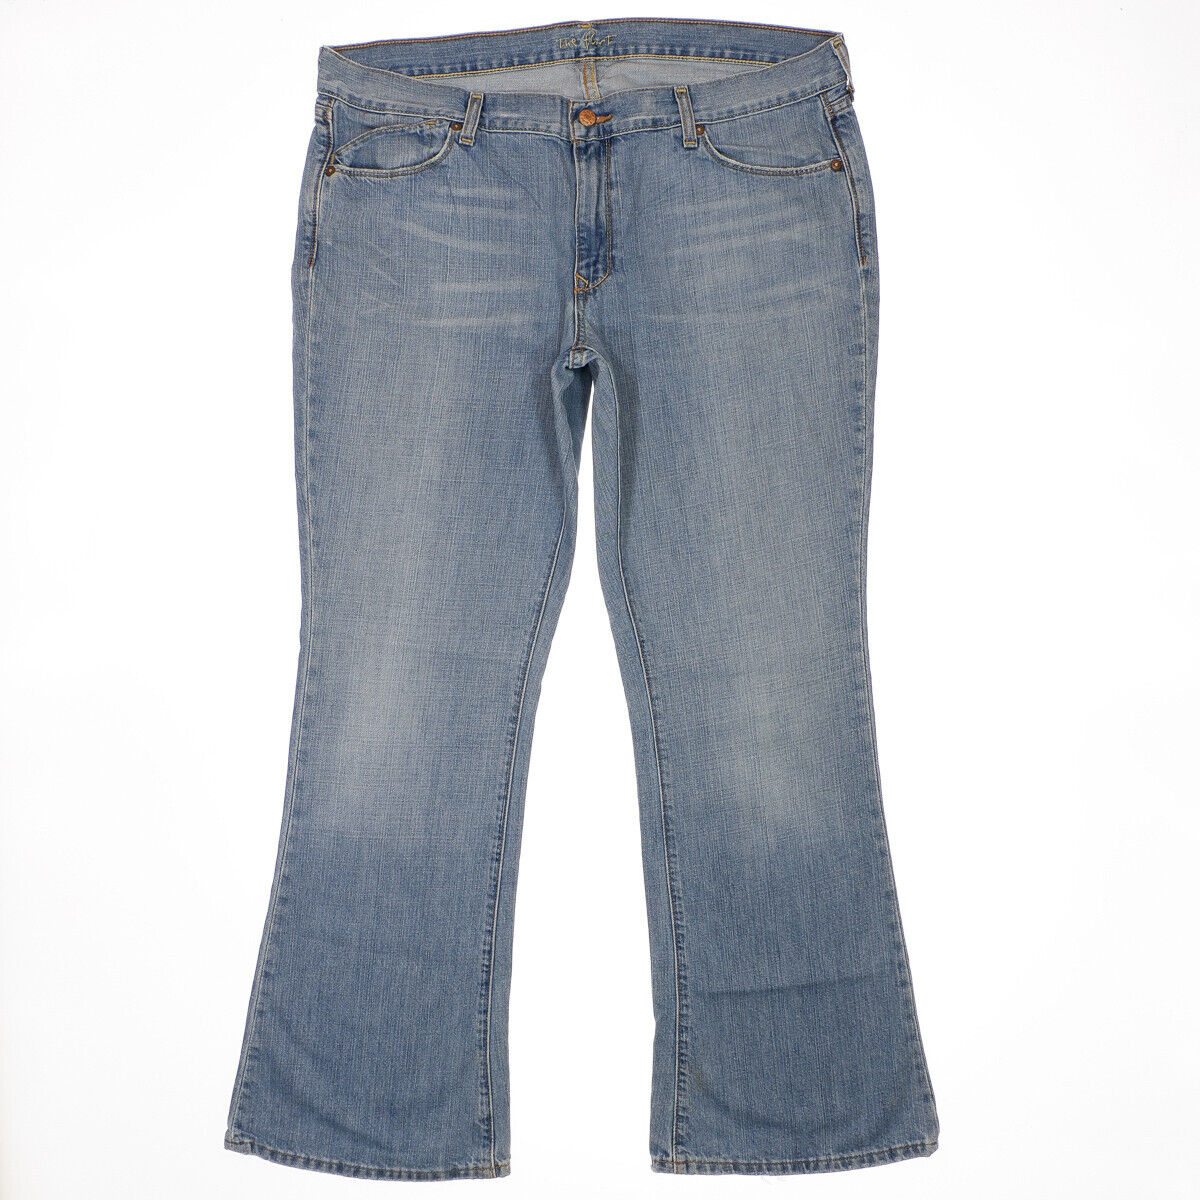 Old Navy The Flirt Bootcut Jeans Size 16 Womens Blue Denim Measures 39 x 30.5